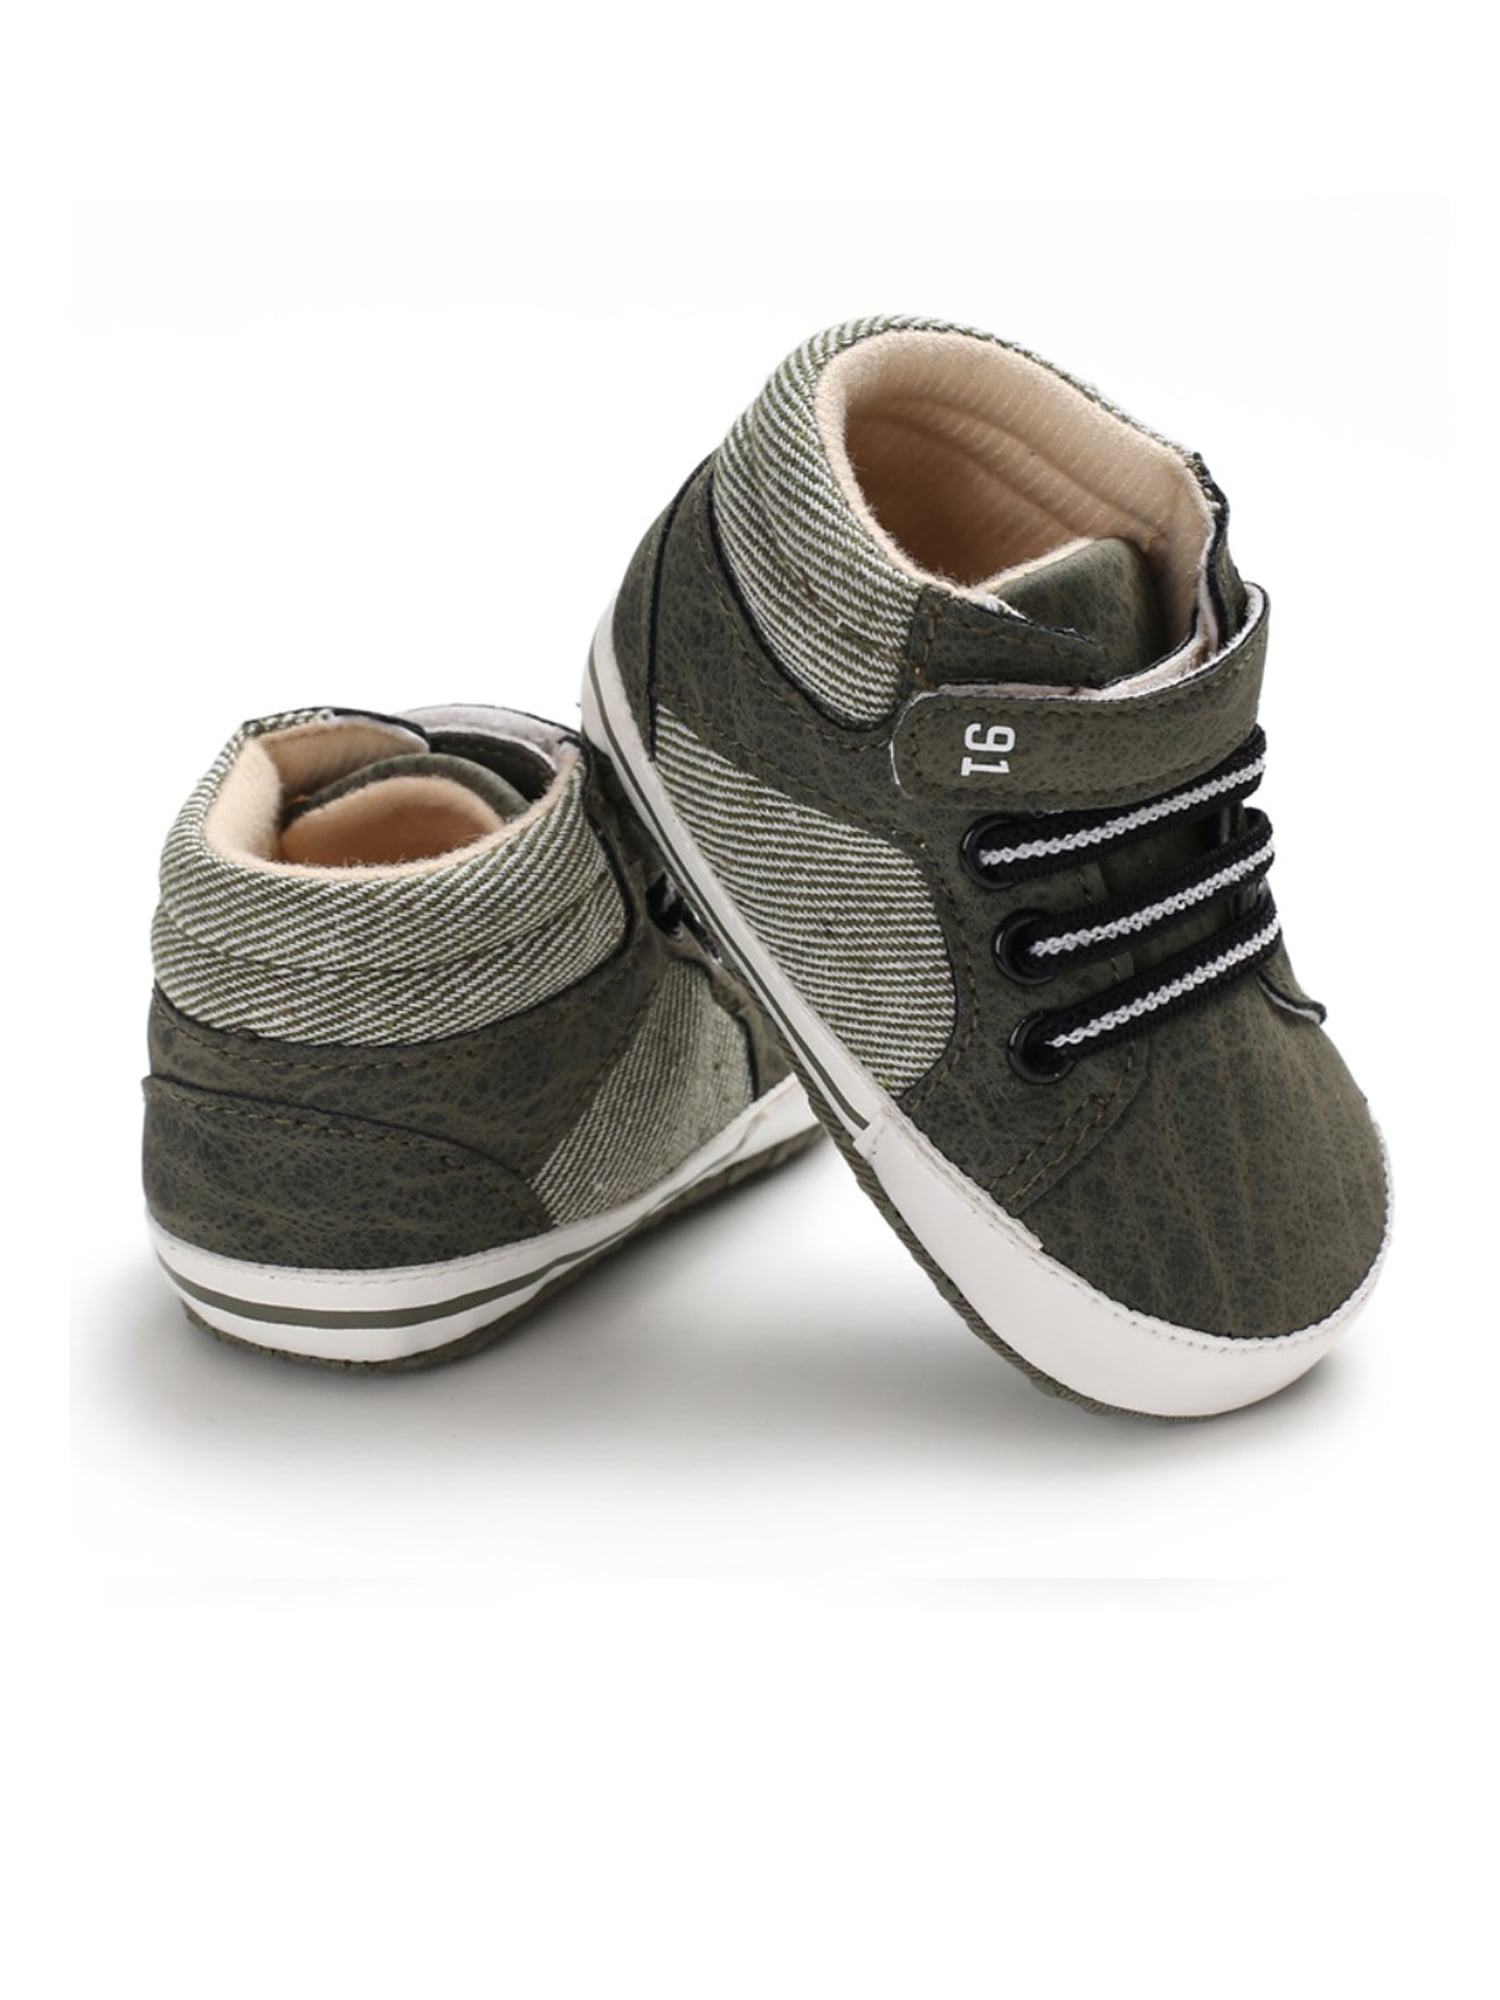 Newborn to 12 Baby Boy Girl Pram Shoes Infant Sneakers Toddler PreWalker Trainer